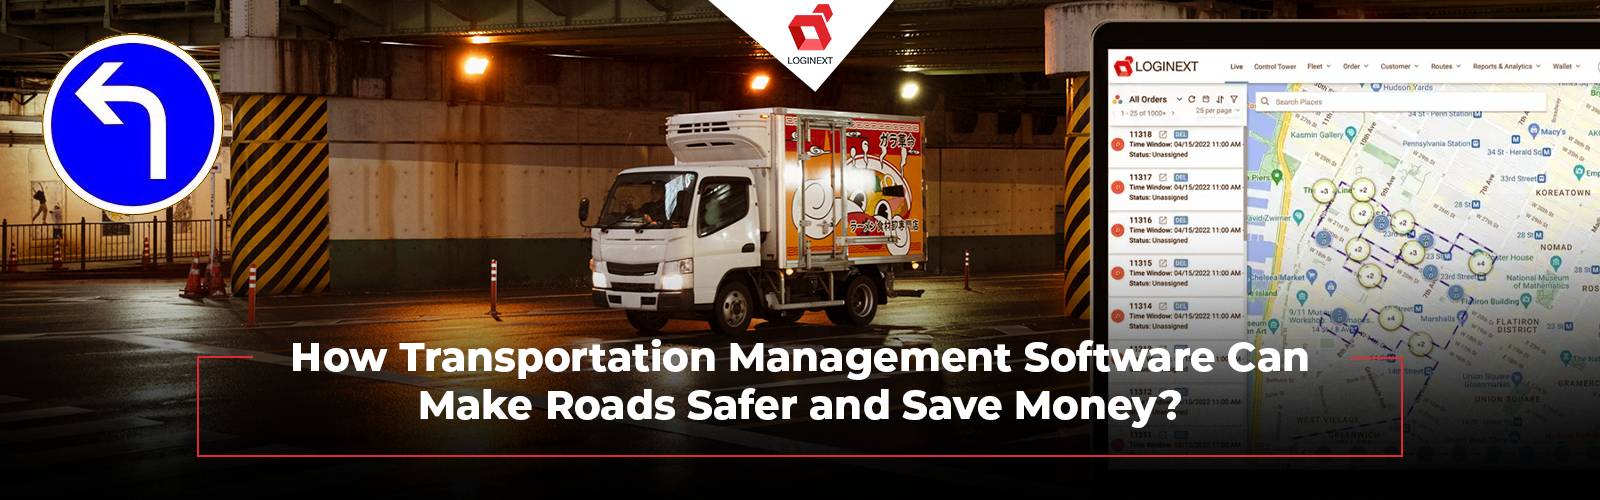 How Transportation Management Software Can Make Roads Safer and Save Money?